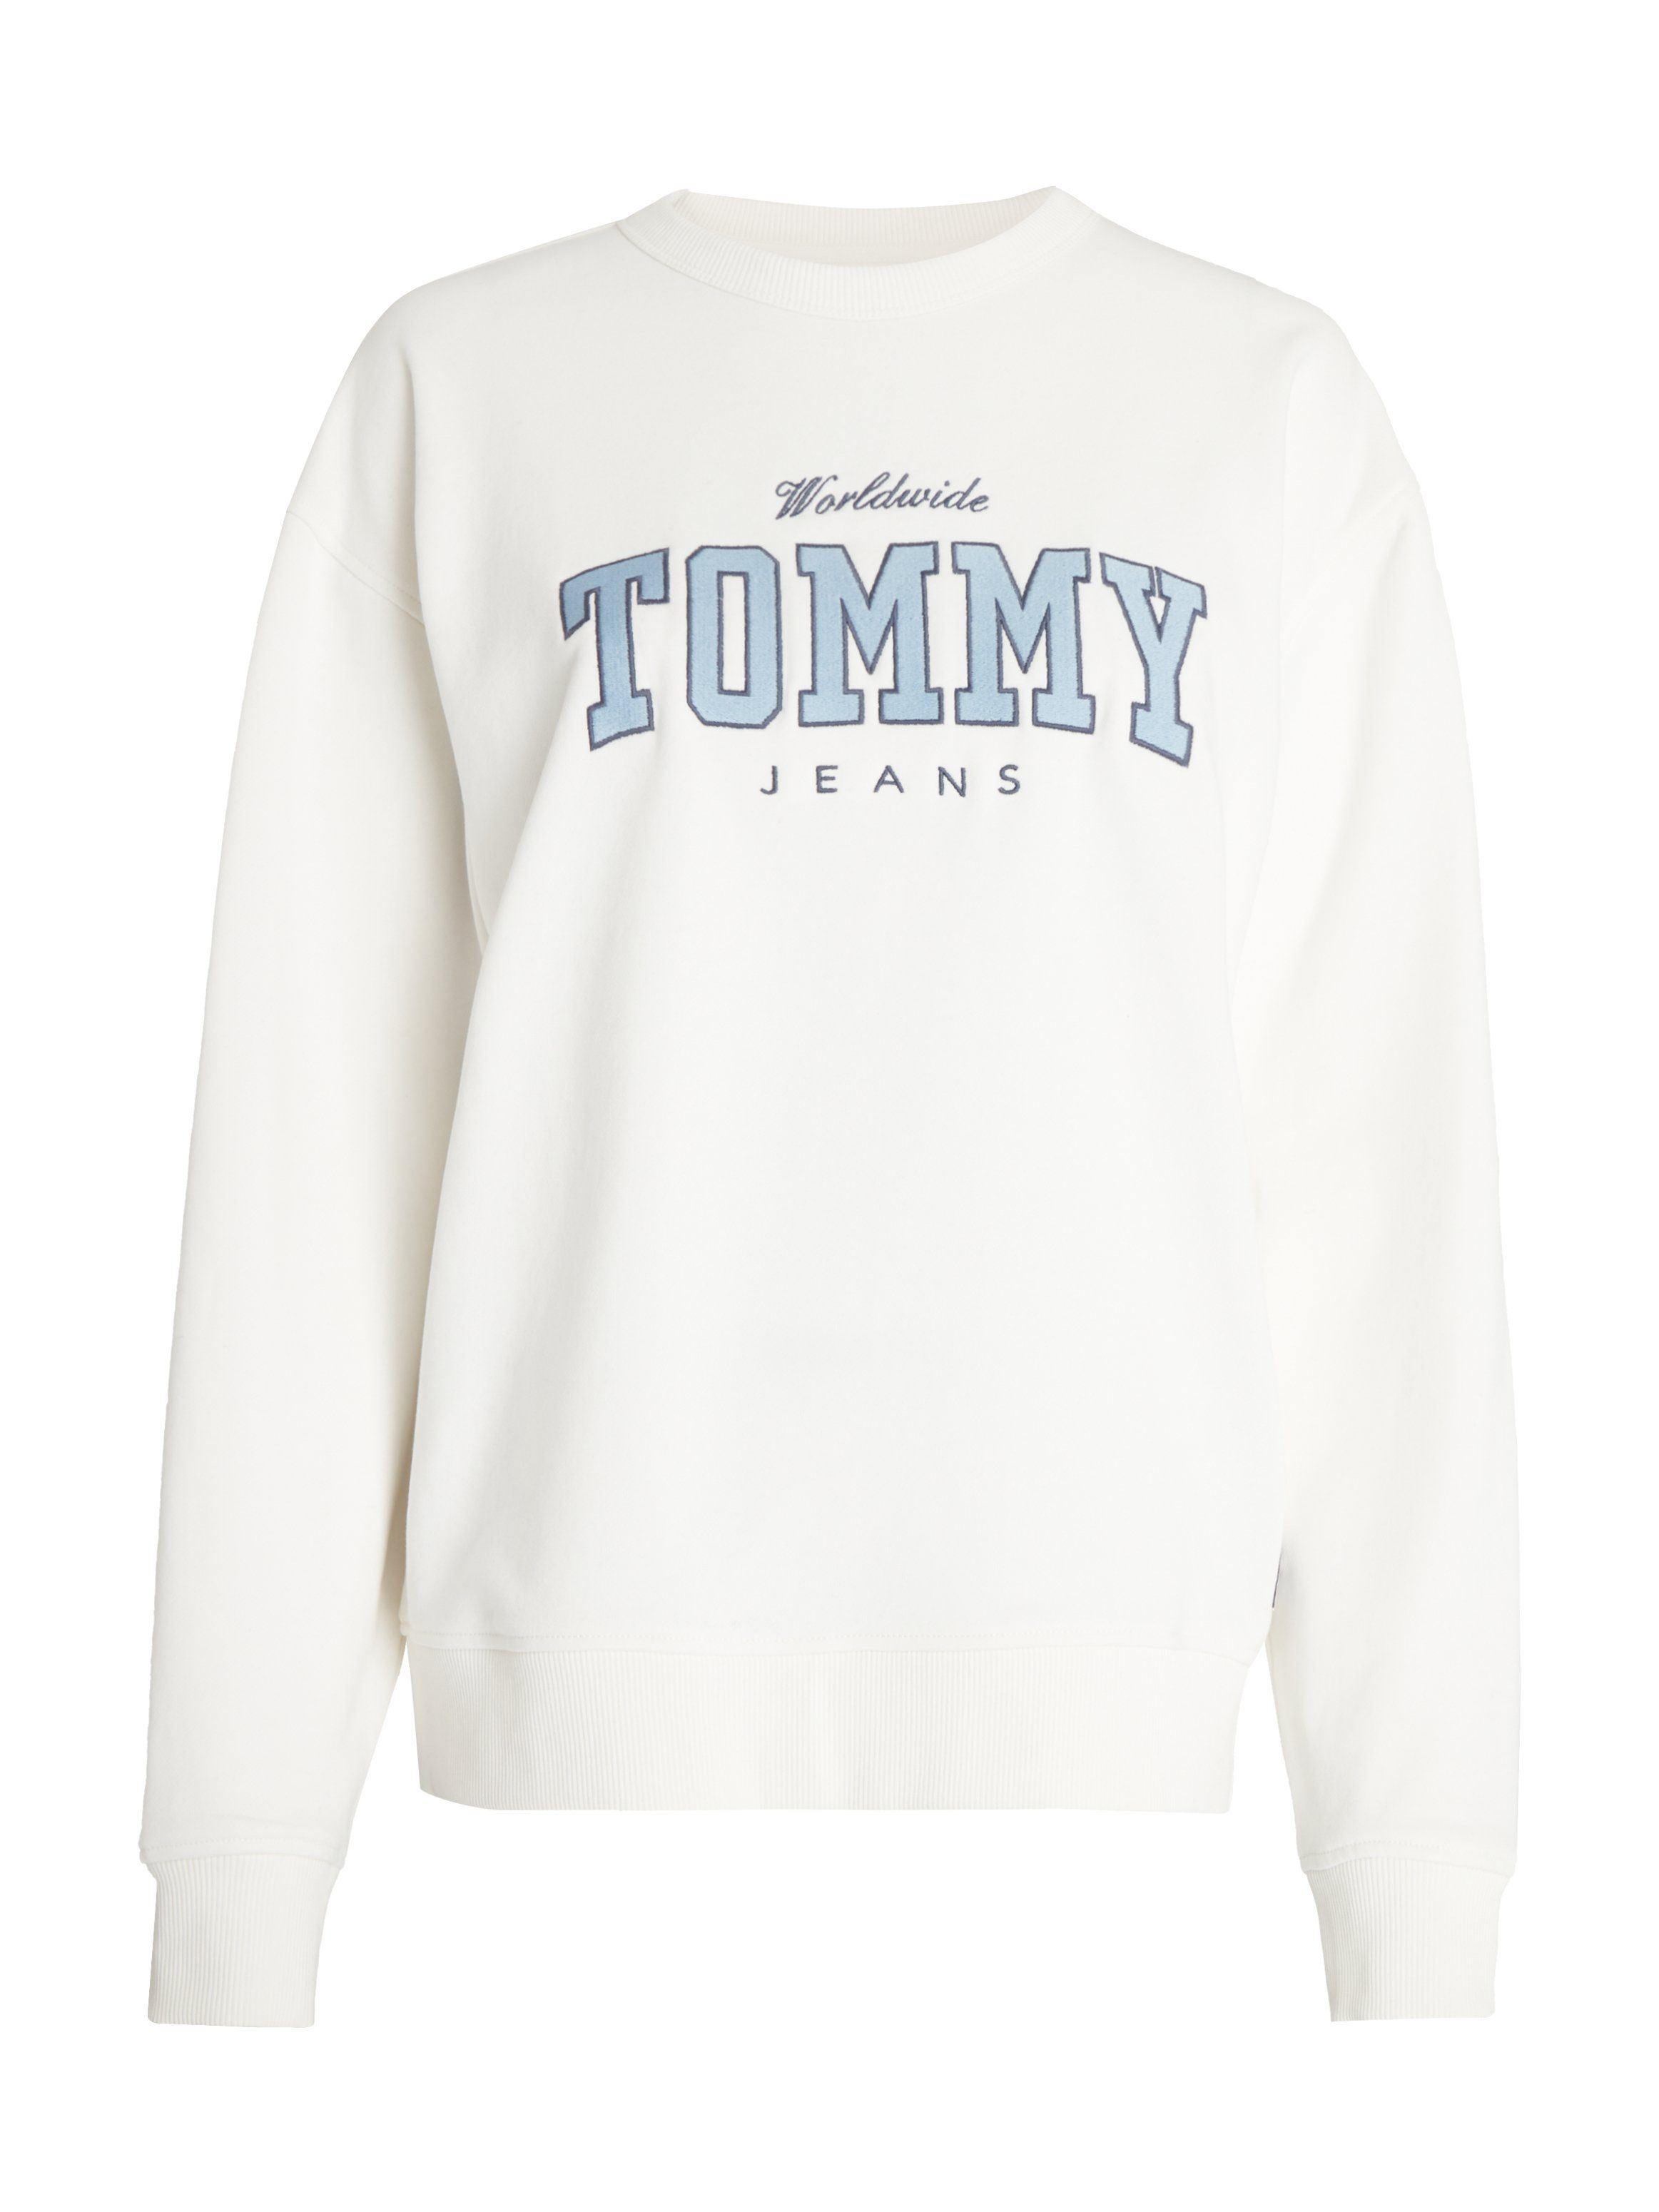 gesticktem RLX Ancient_White CREW Jeans Sweatshirt TJW mit Logoschriftzug LUXE Tommy VARSITY